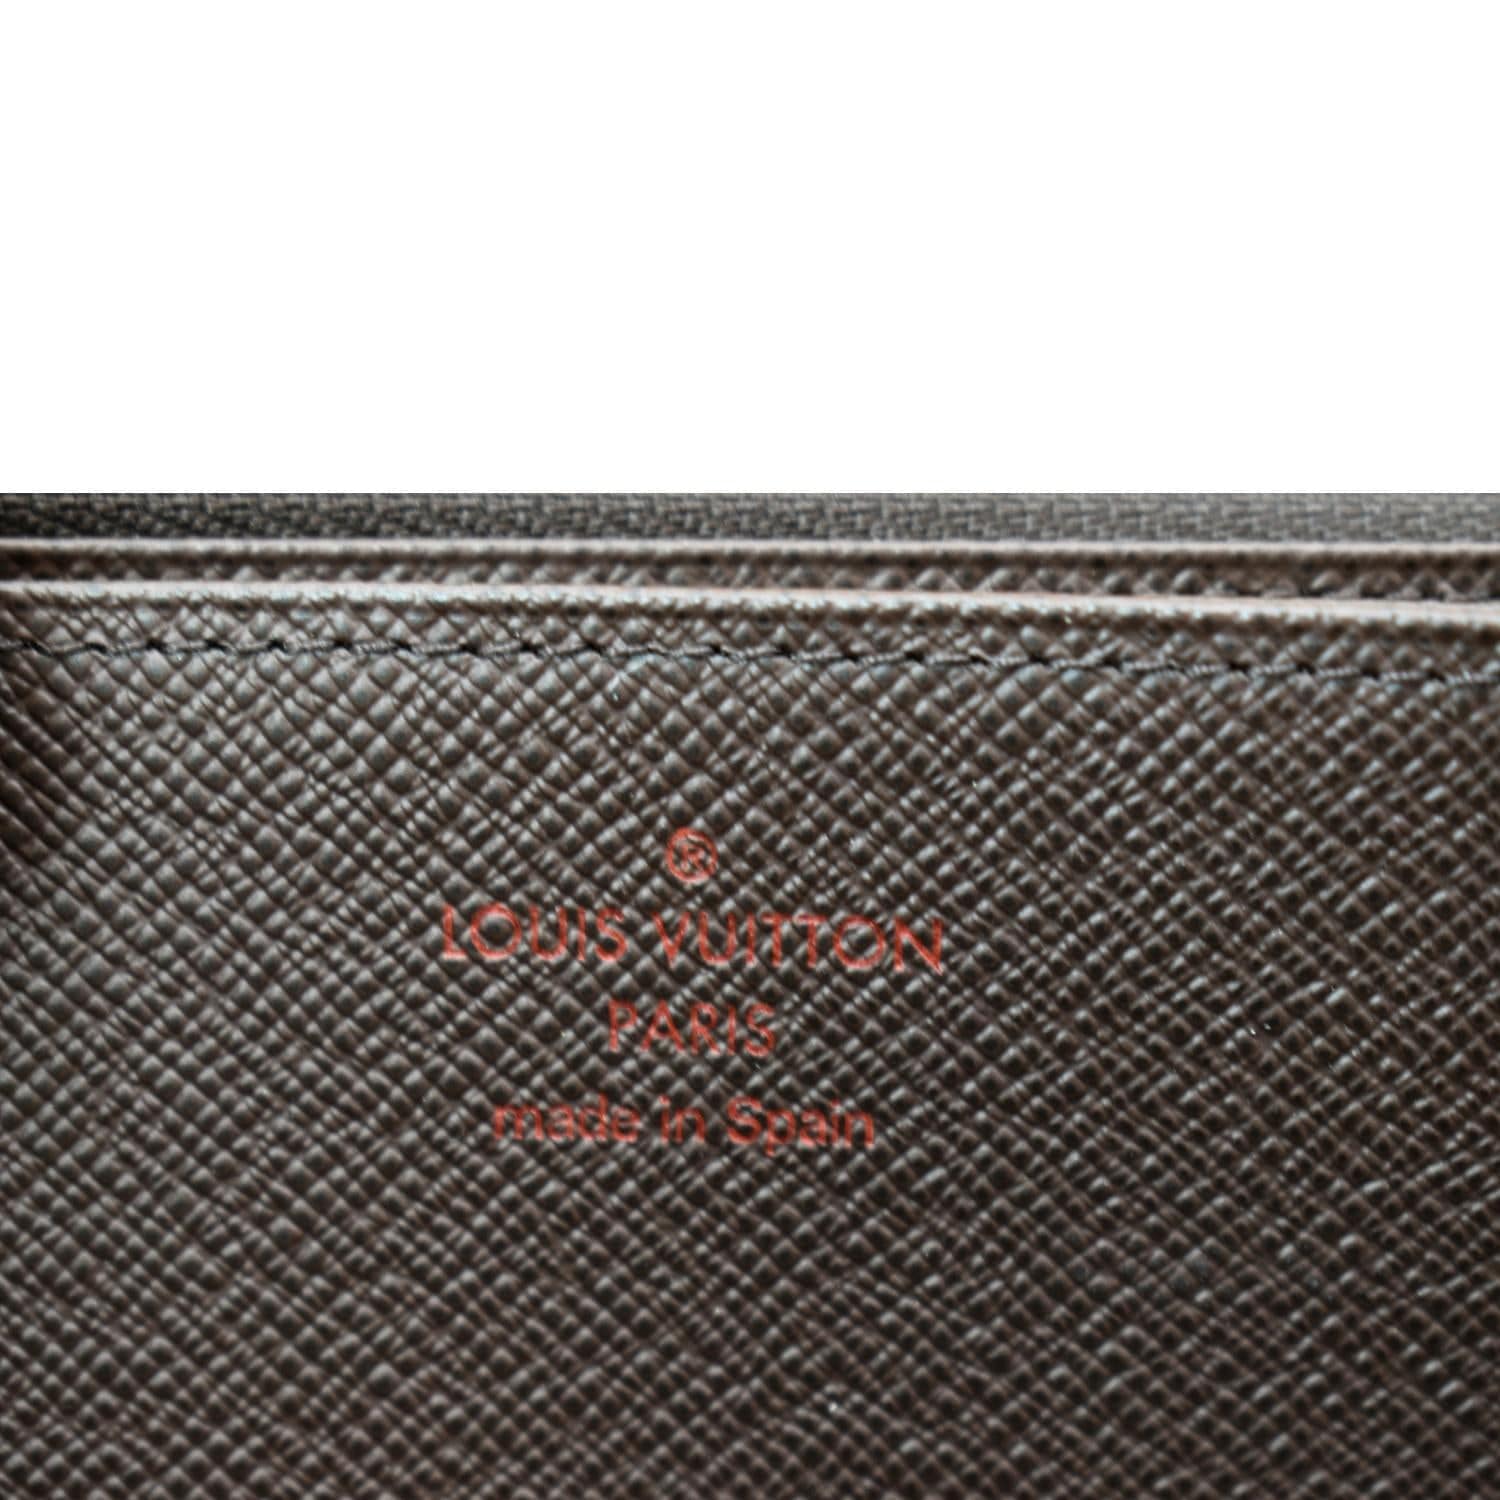 Grote Louis Vuitton zippy wallet in Damier Ebene - Garderobe